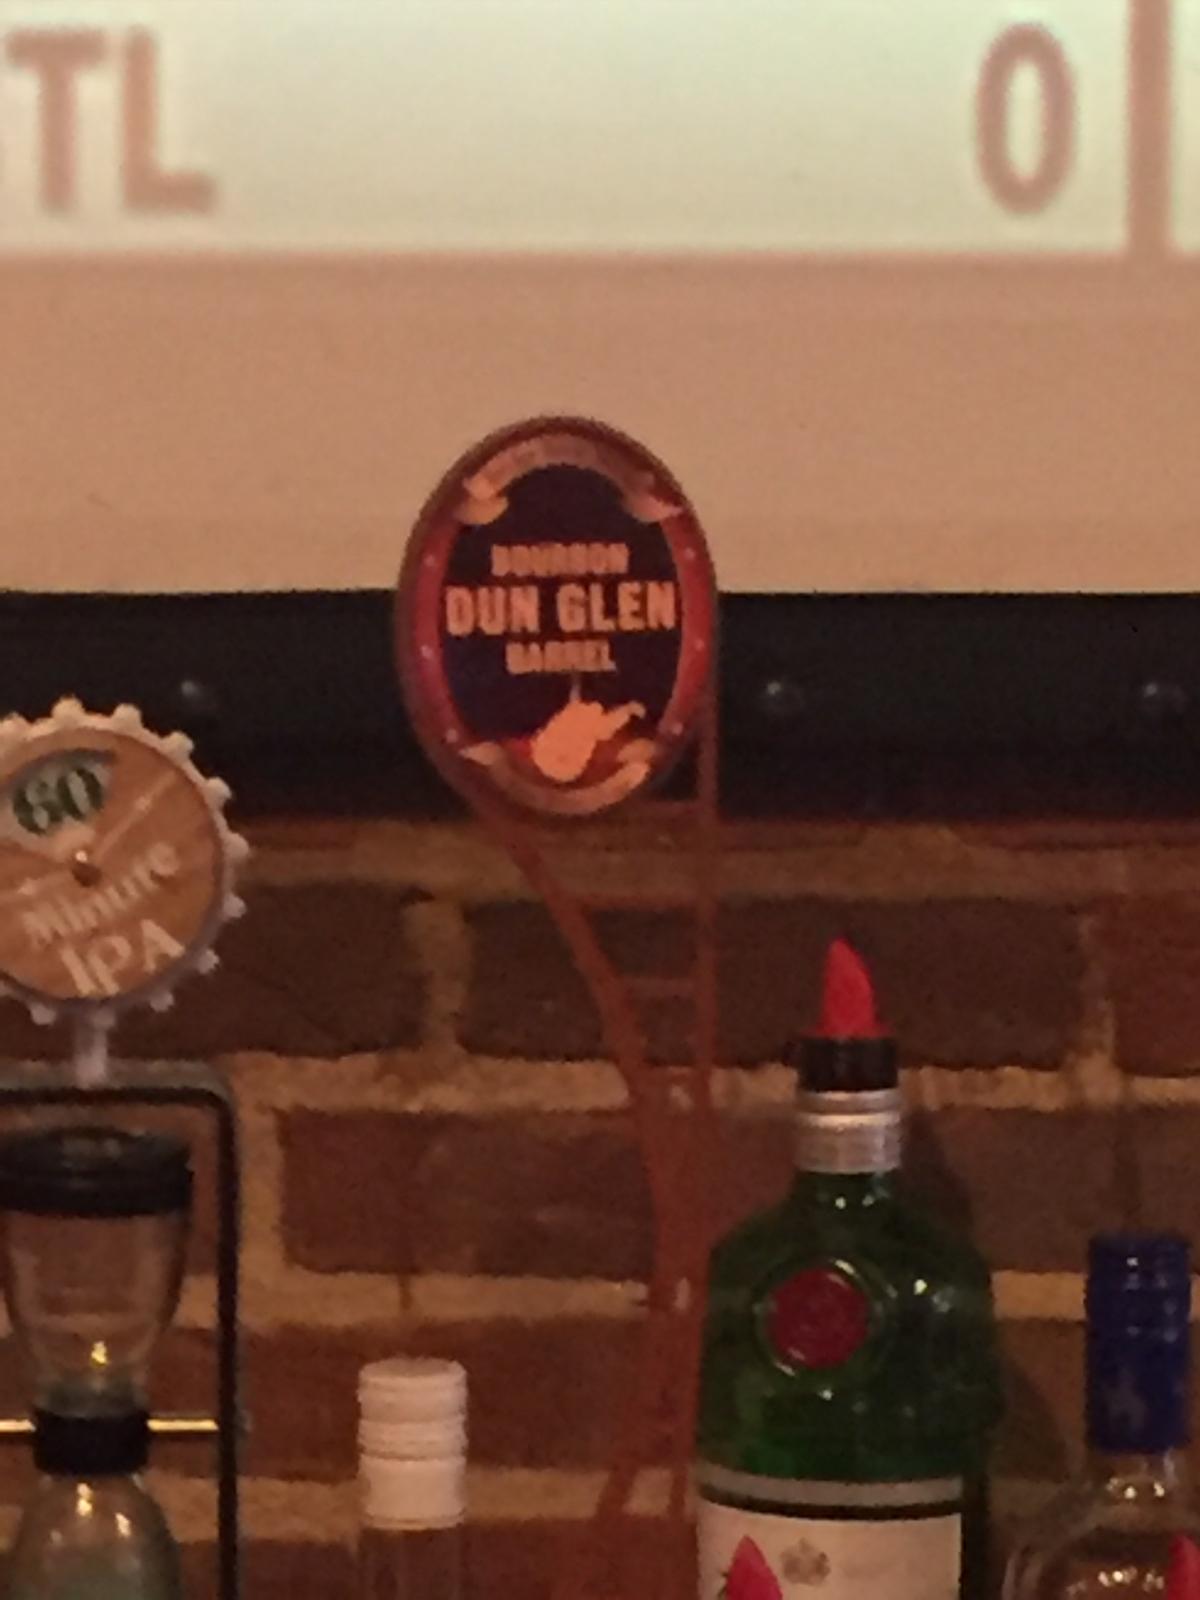 The Dun Glen Dubbel Bourbon Barrel Aged